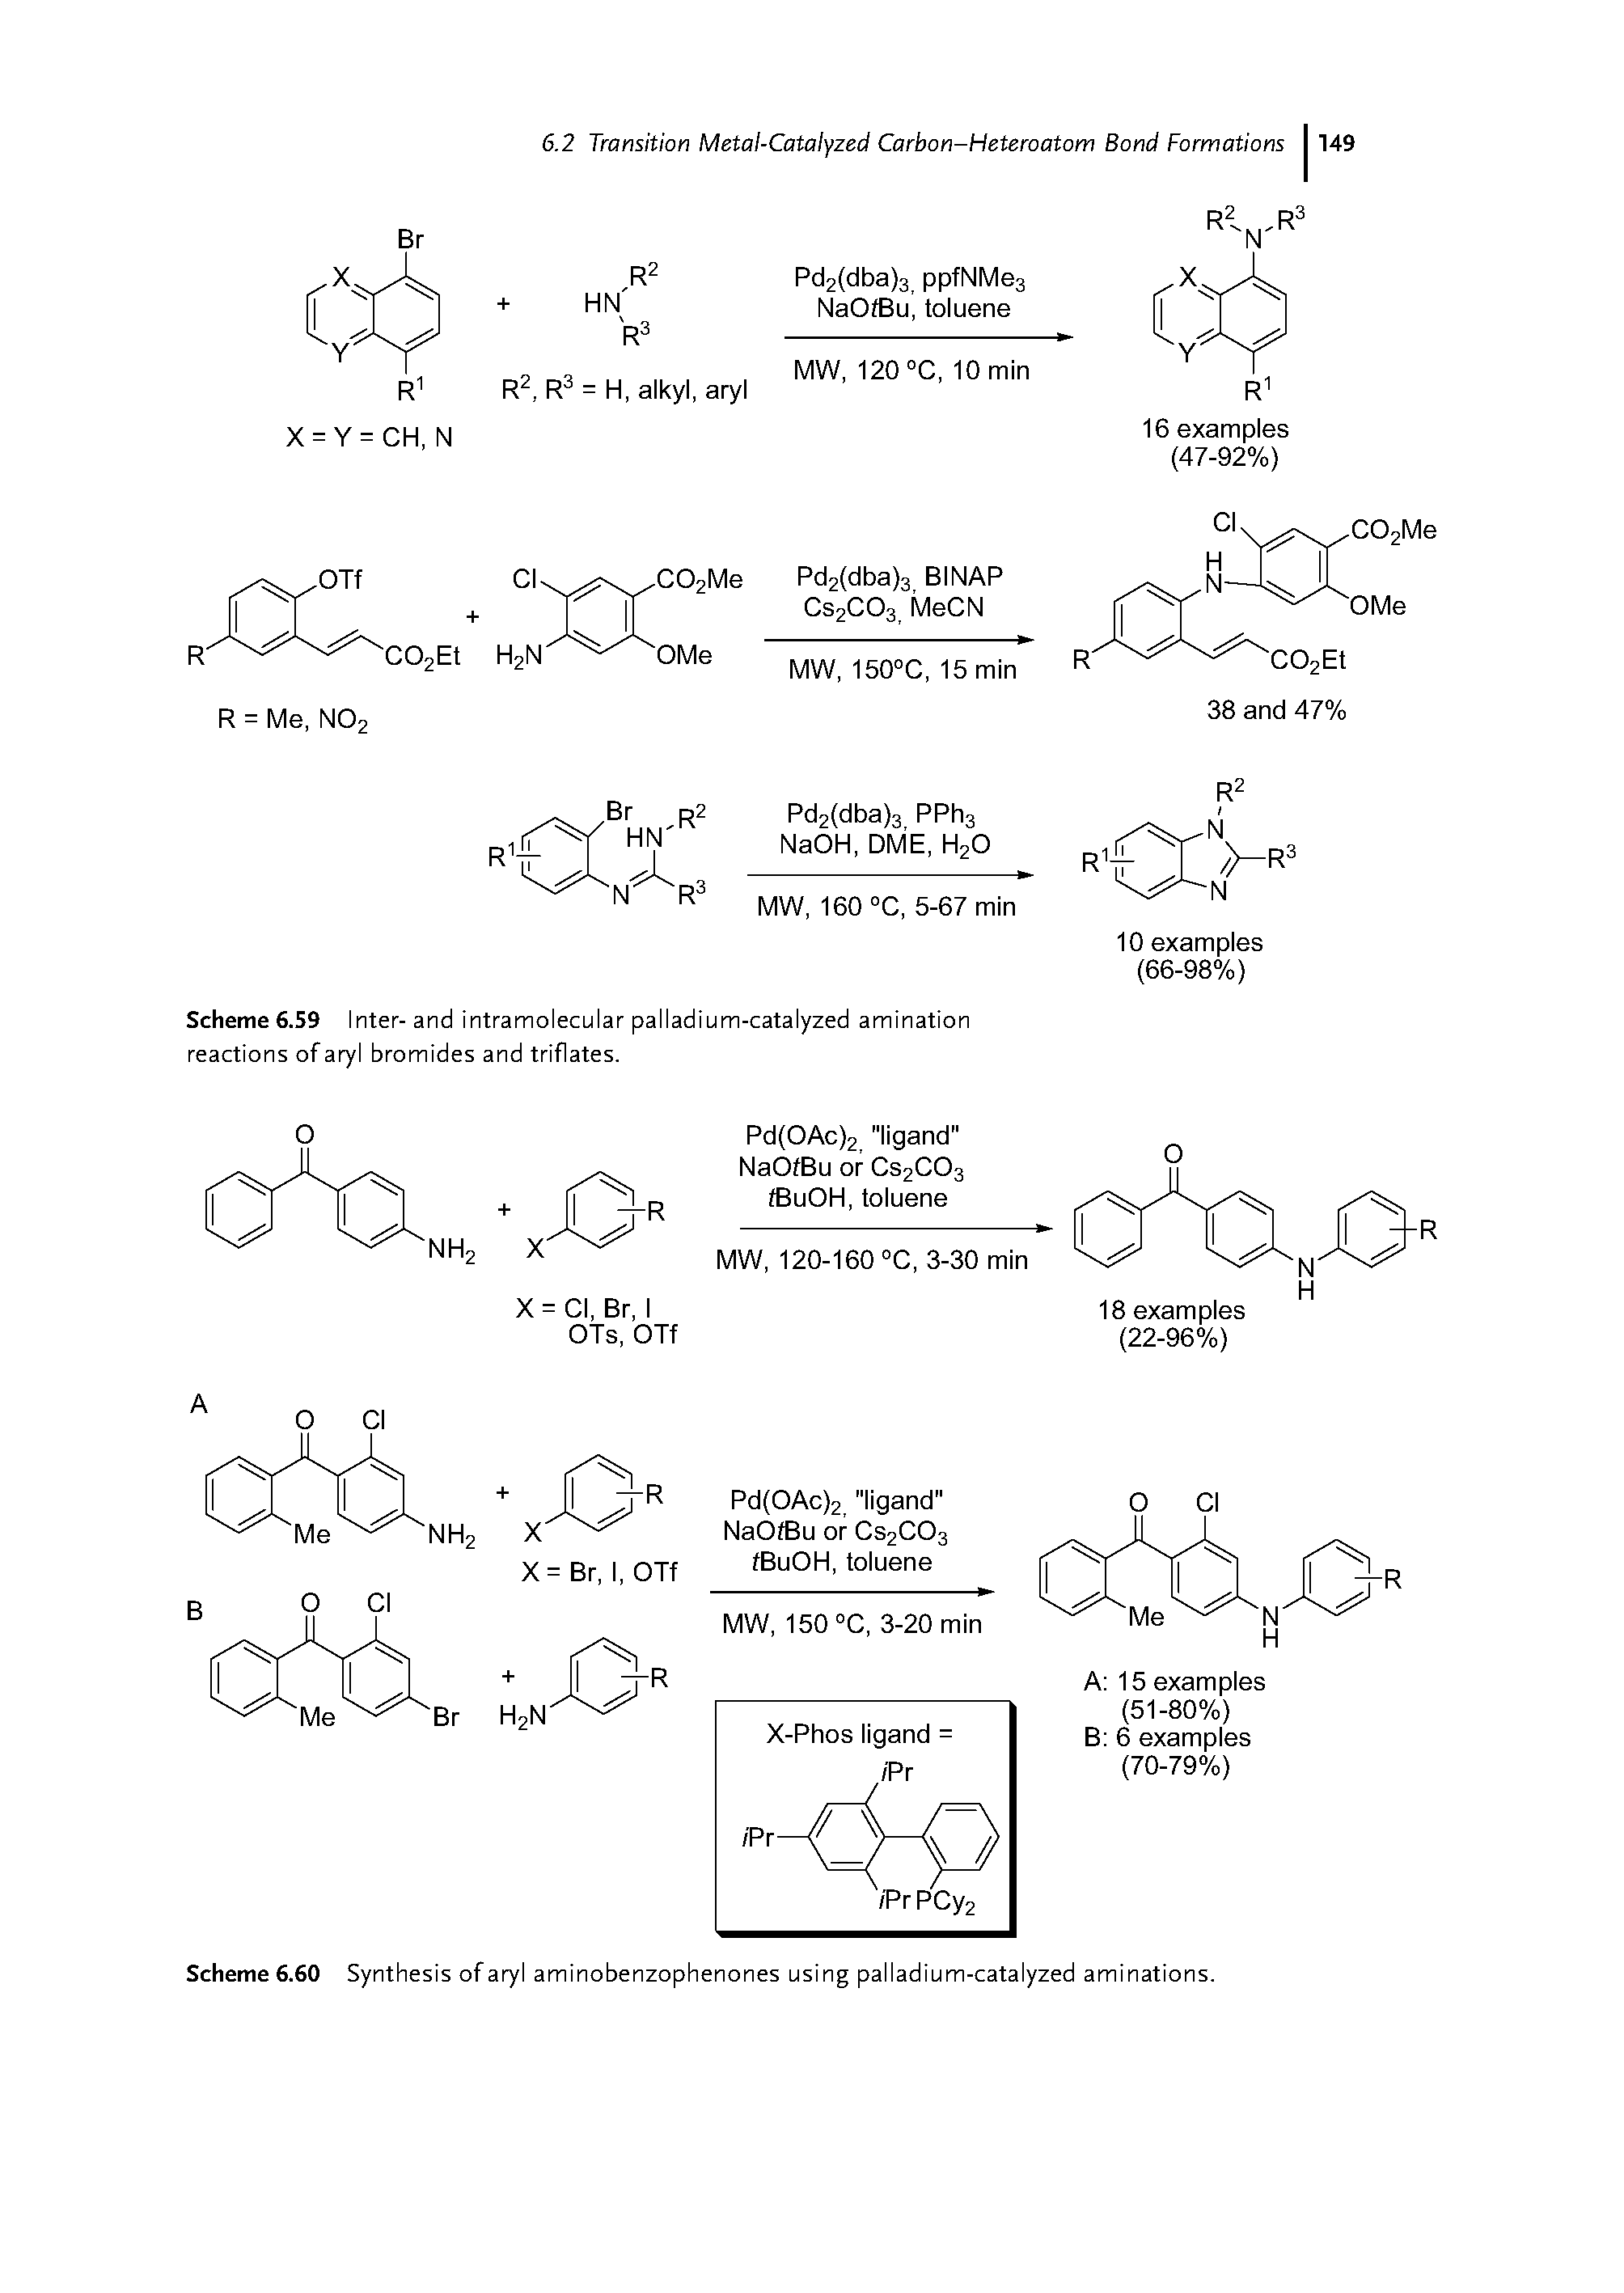 Scheme 6.60 Synthesis of aryl aminobenzophenones using palladium-catalyzed aminations.